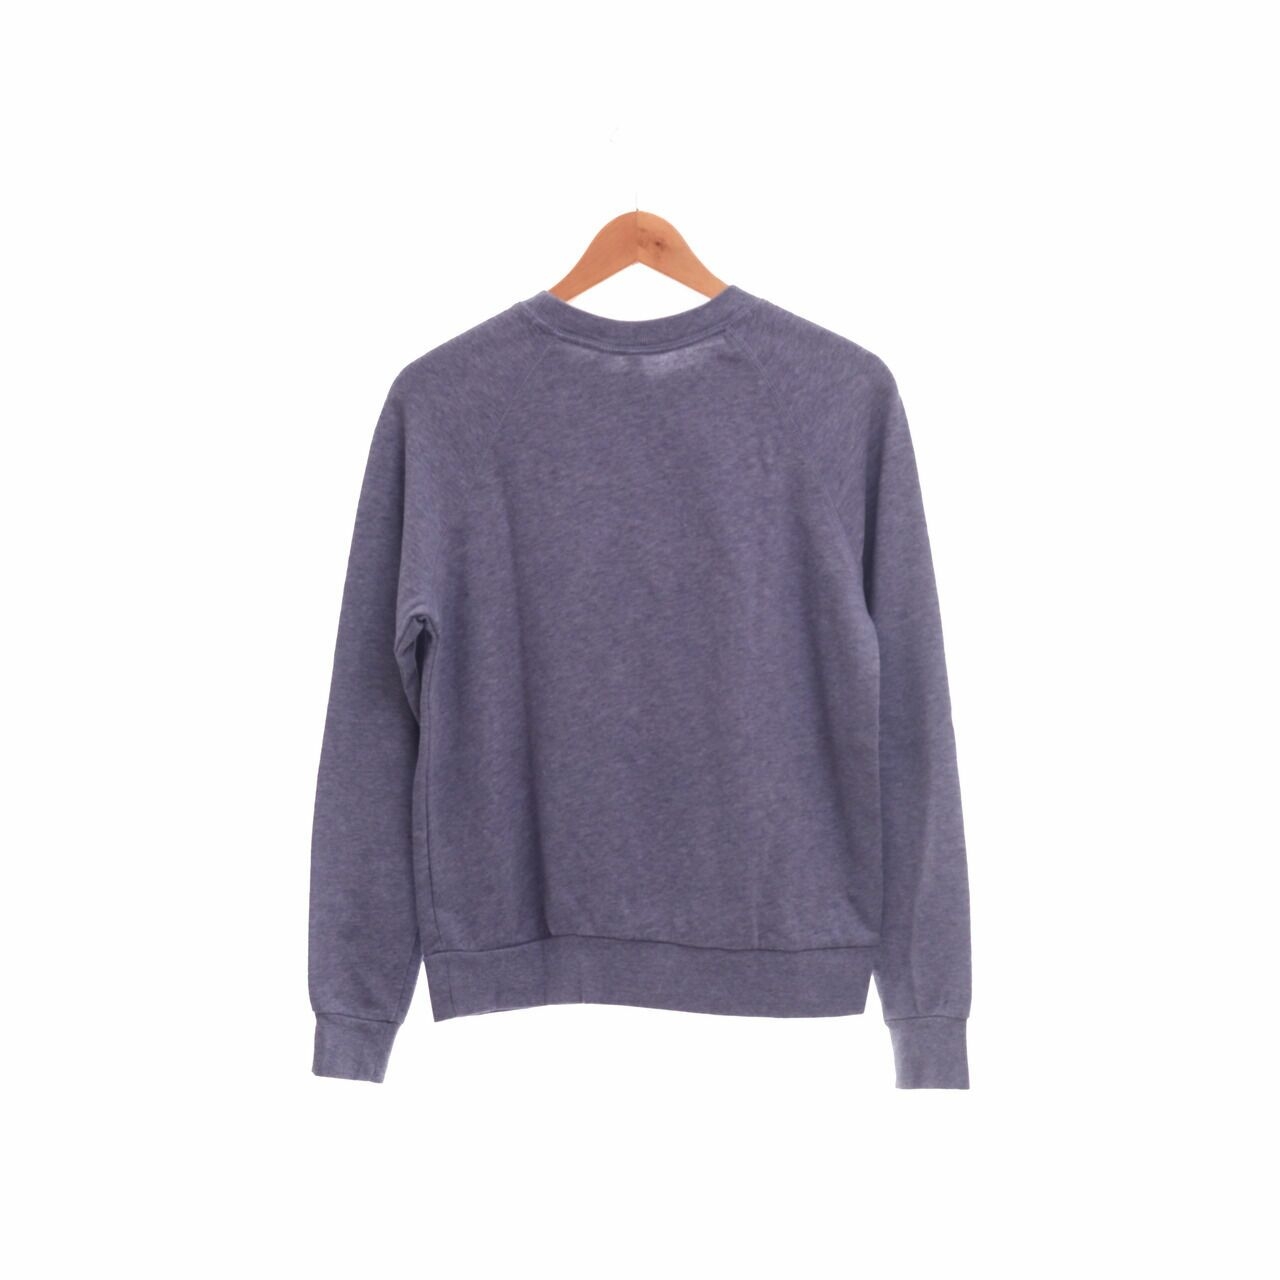 H&M Purple Sweater